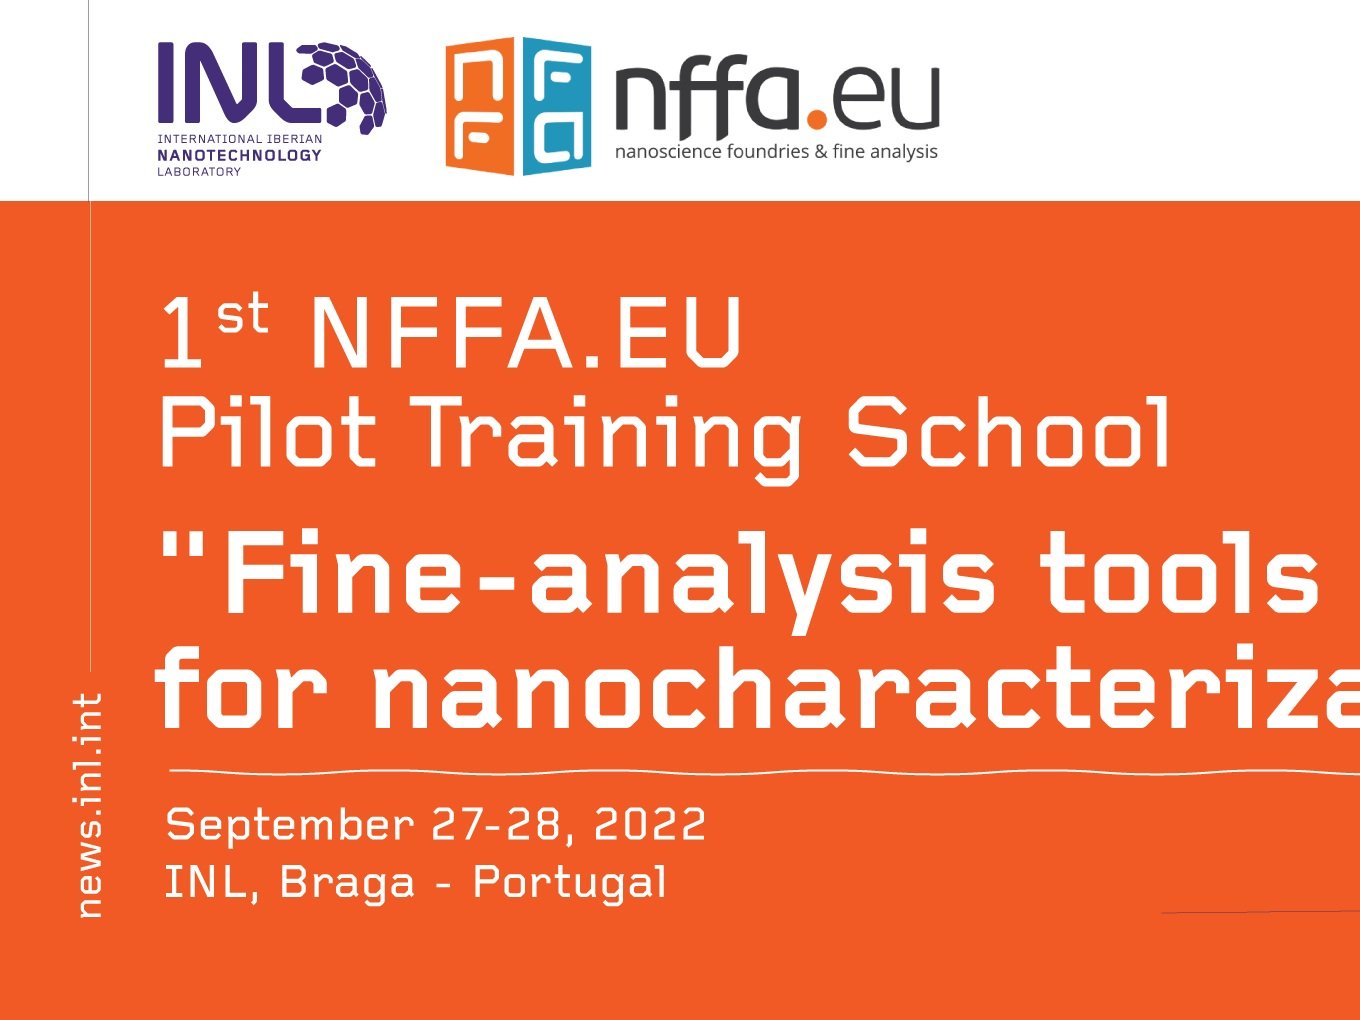 Nffa.eu Pilot Training School Devoted to “Fine-analysis Tools for Nanocharacterization”